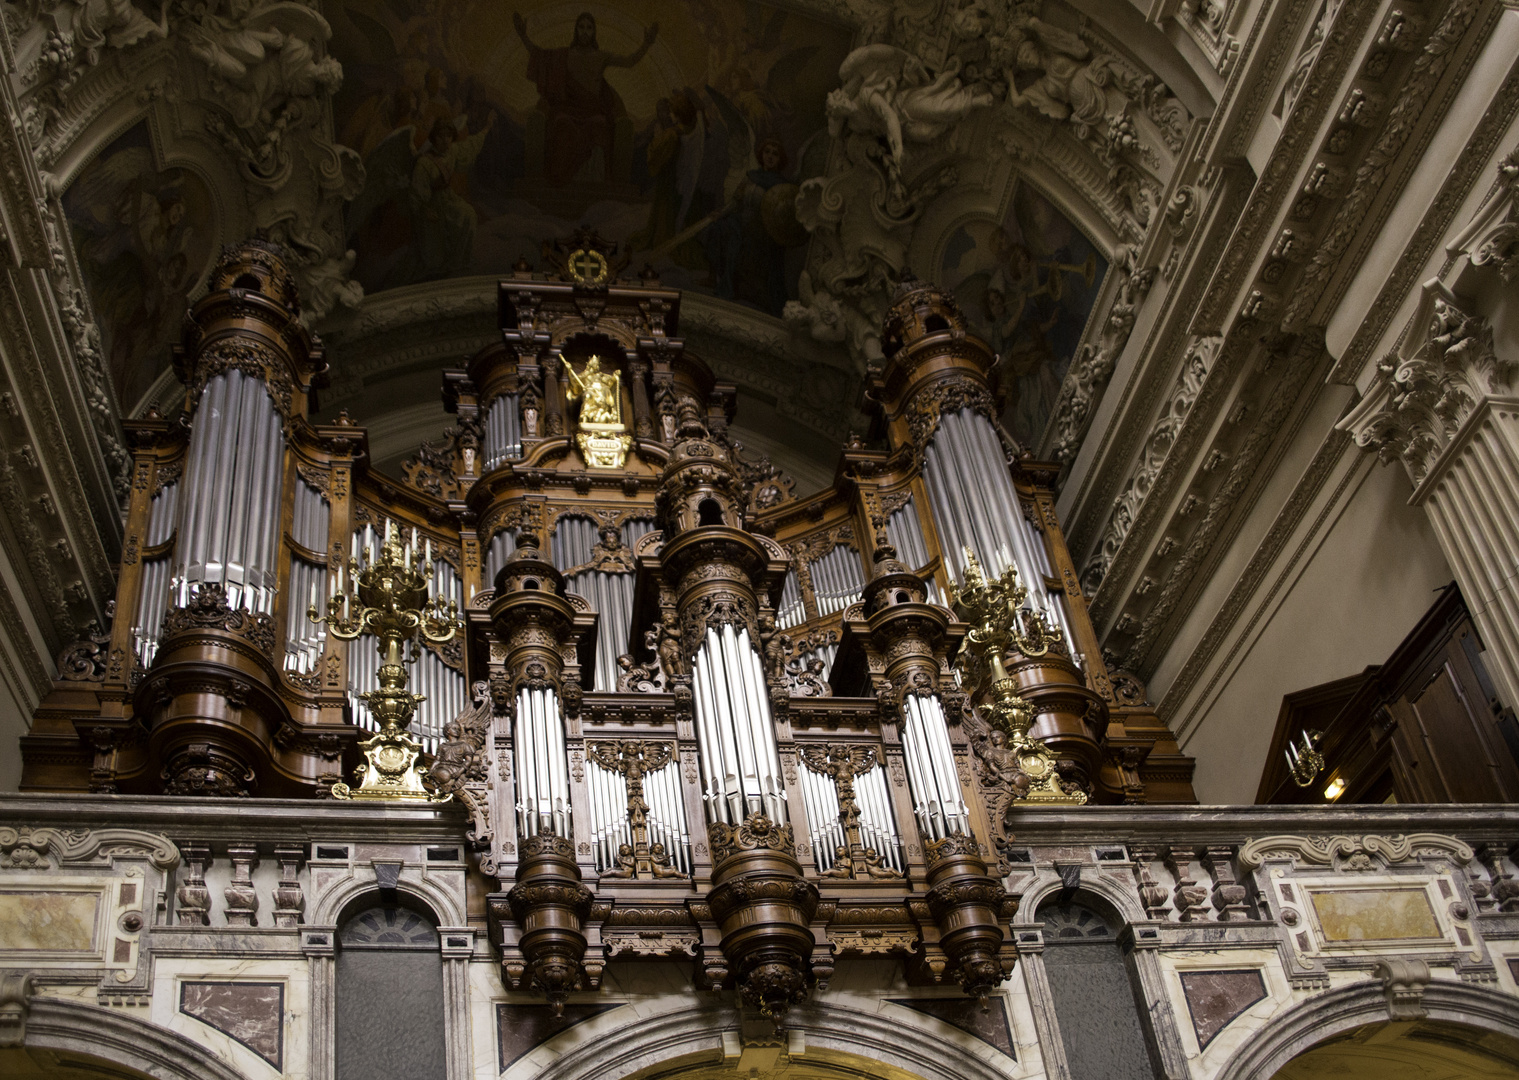 Orgel im Dom Berlin